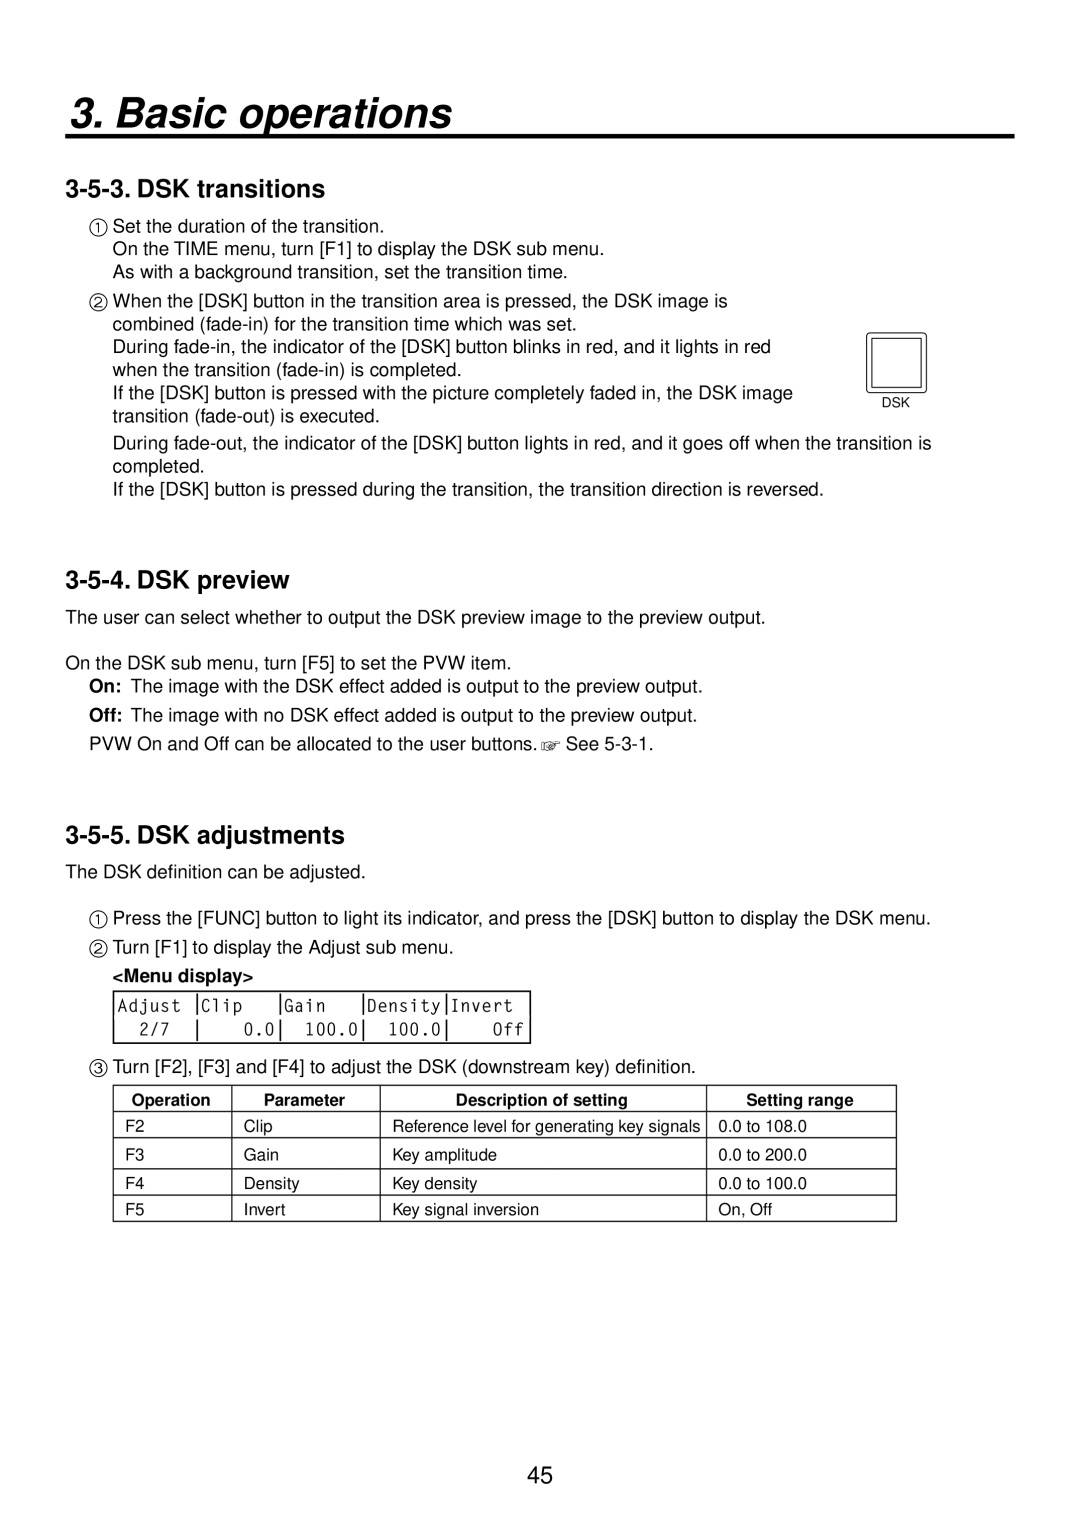 Panasonic AV-HS400AN manual DSK transitions, DSK preview, DSK adjustments, Basic operations, Menu display 